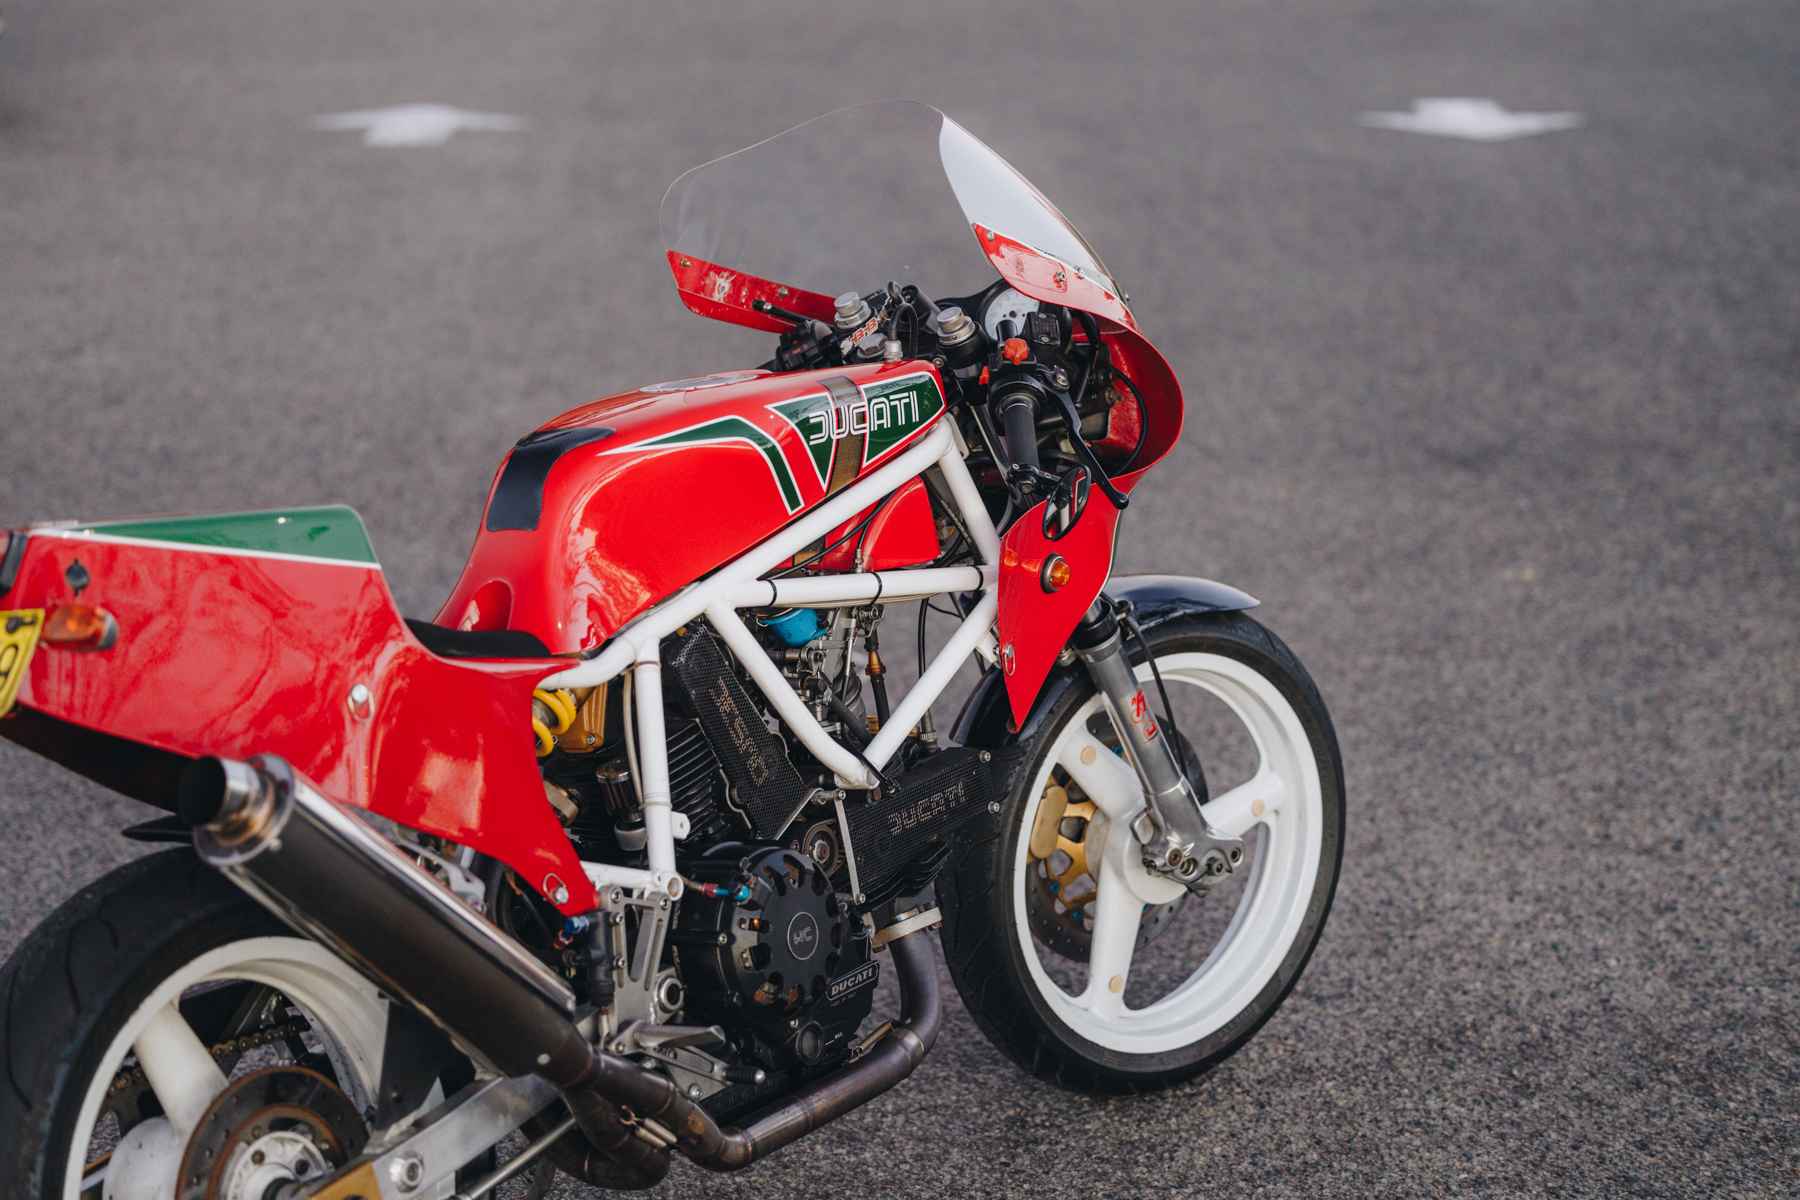 Side photo of a custom Ducati motorcycle